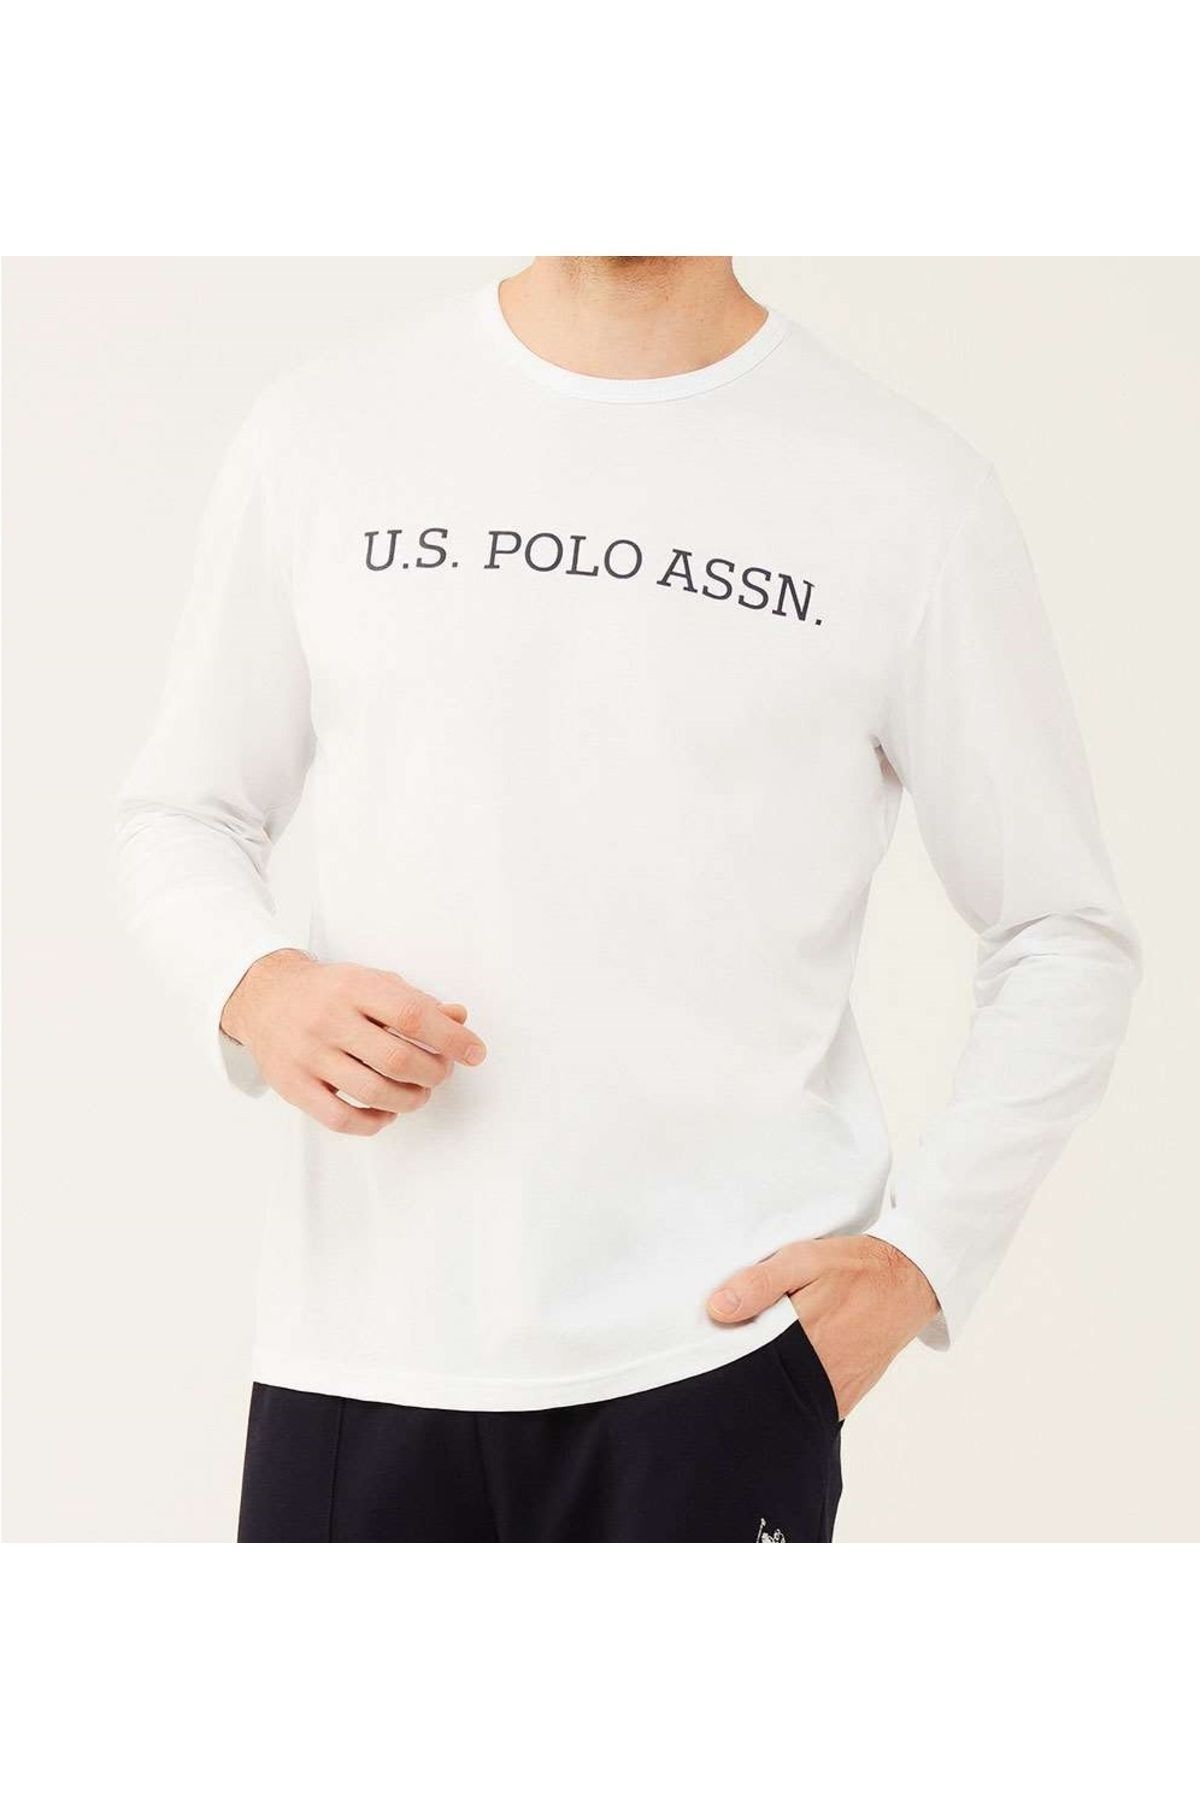 U.S. Polo Assn. Erkek Basic İnce Uzun Kollu Beyaz T-shirt